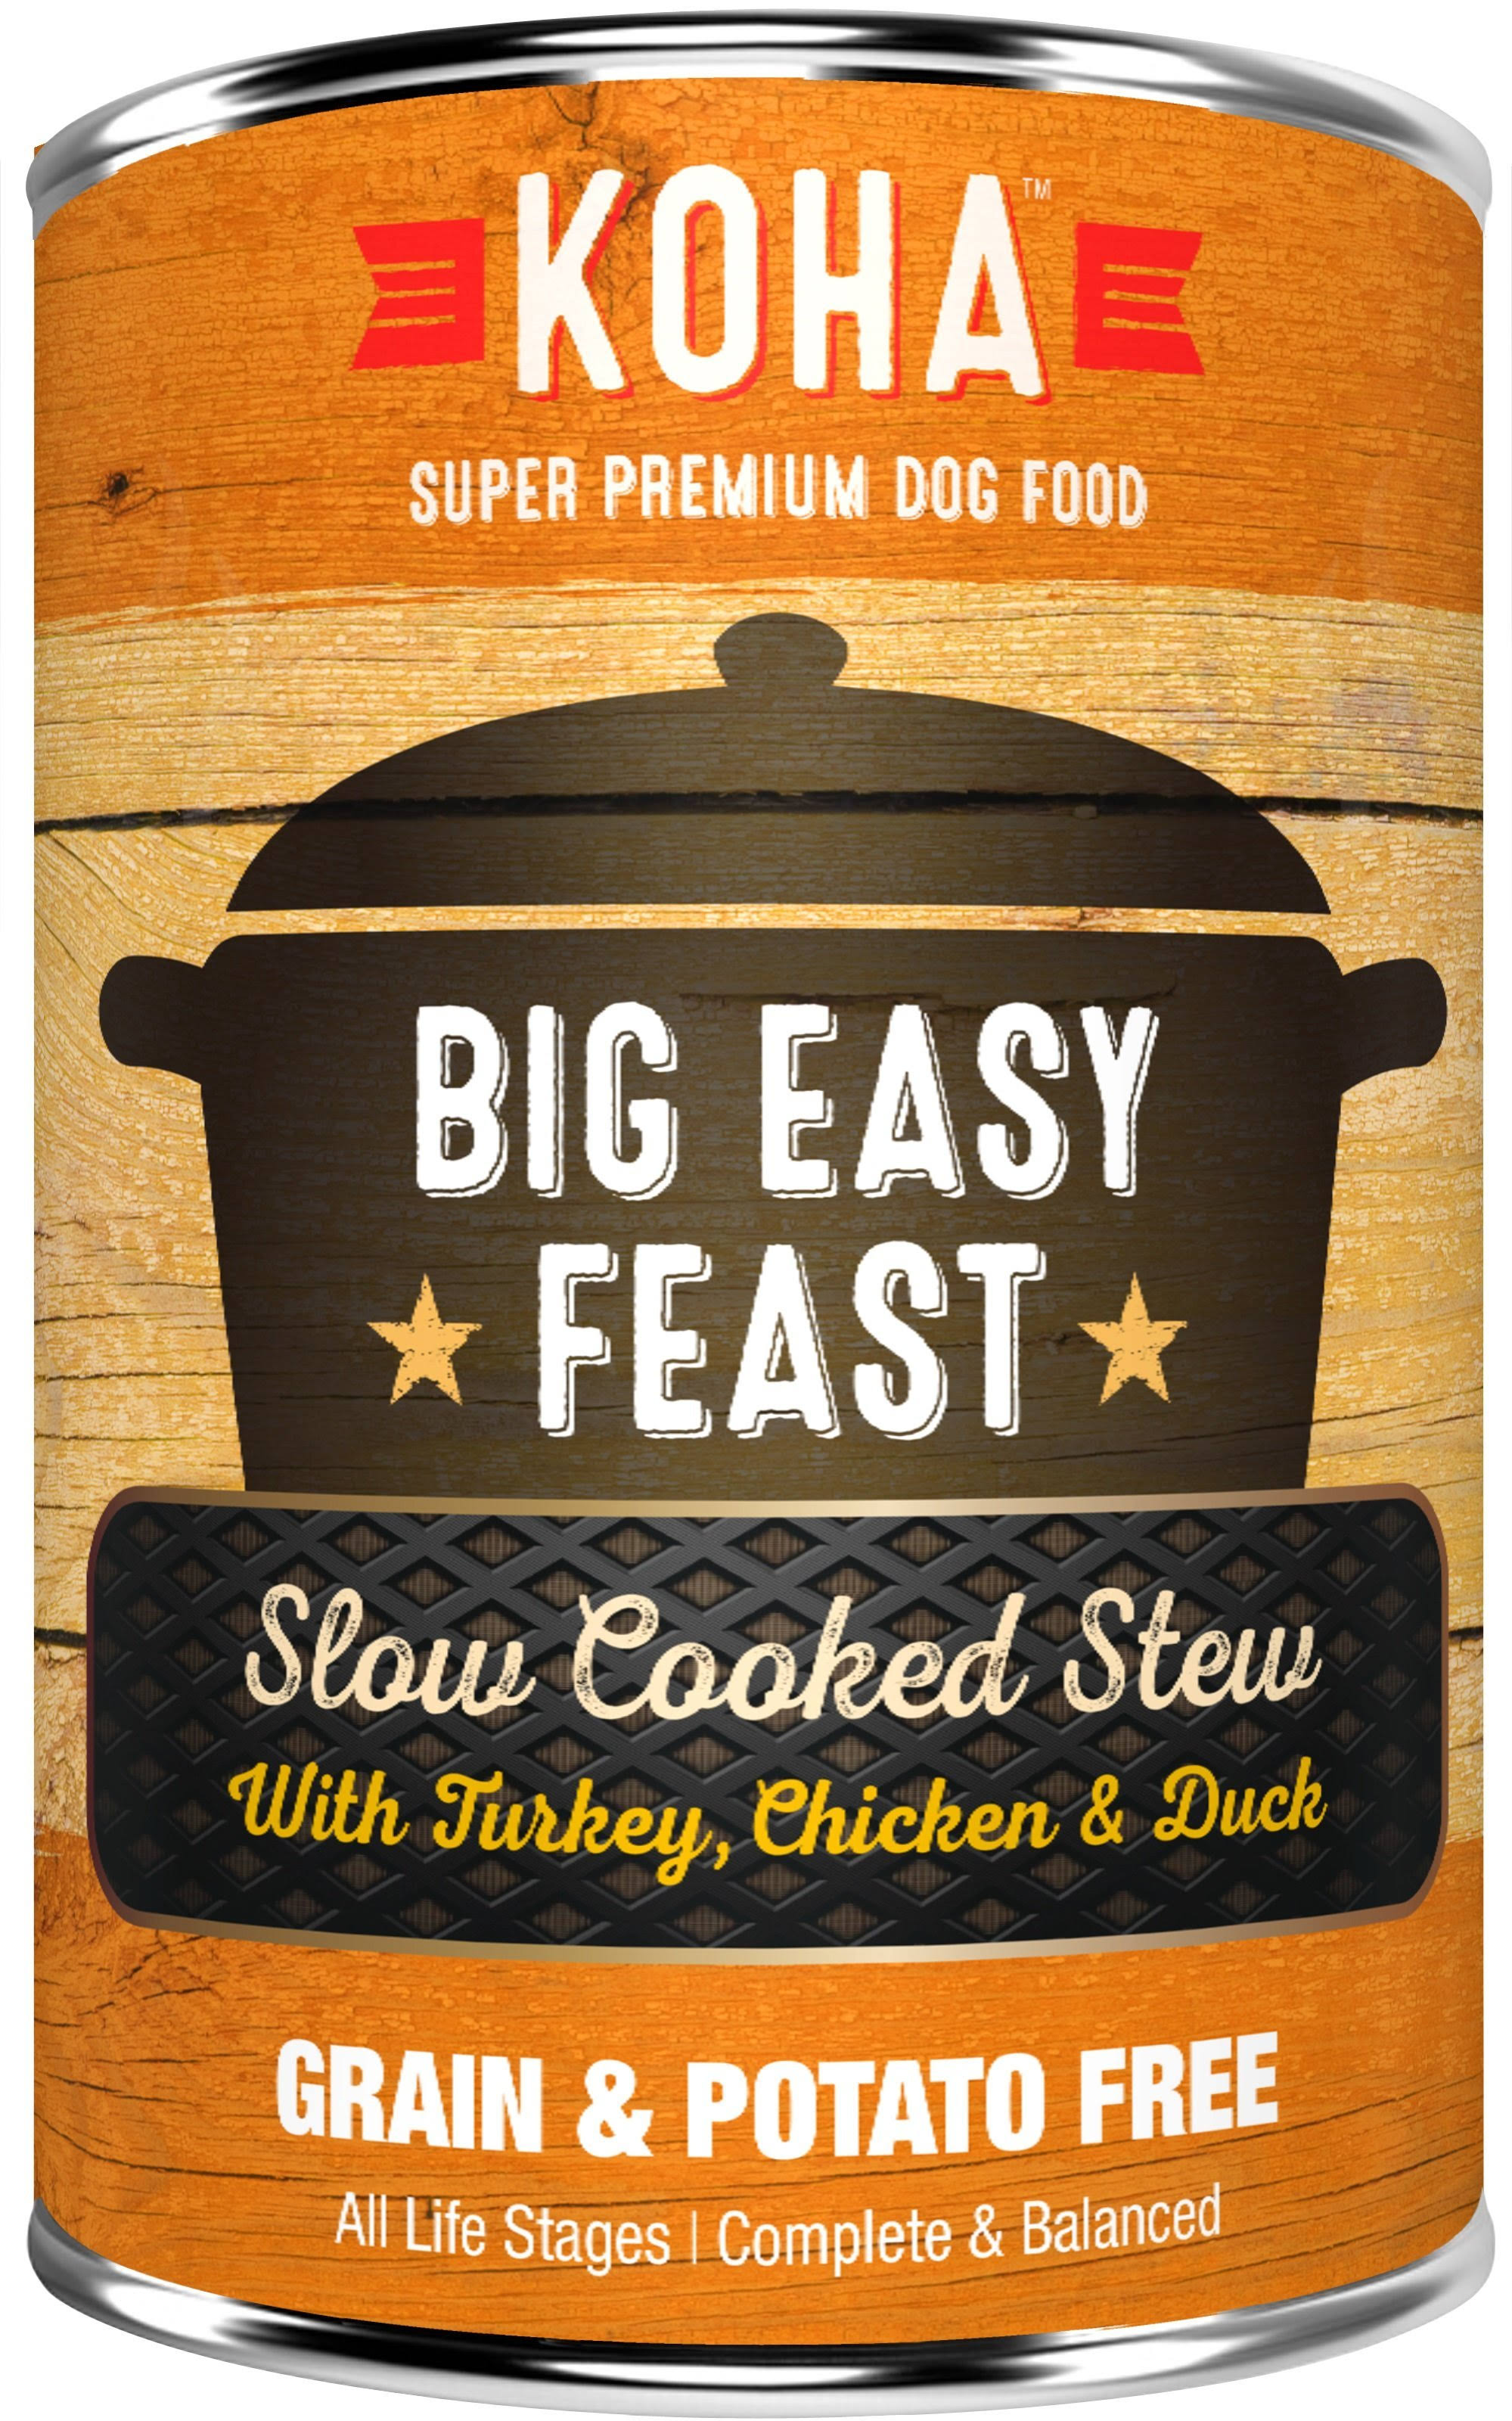 Koha Slow Cooked Stew Big Easy Feast 12.7oz Canned Dog Food